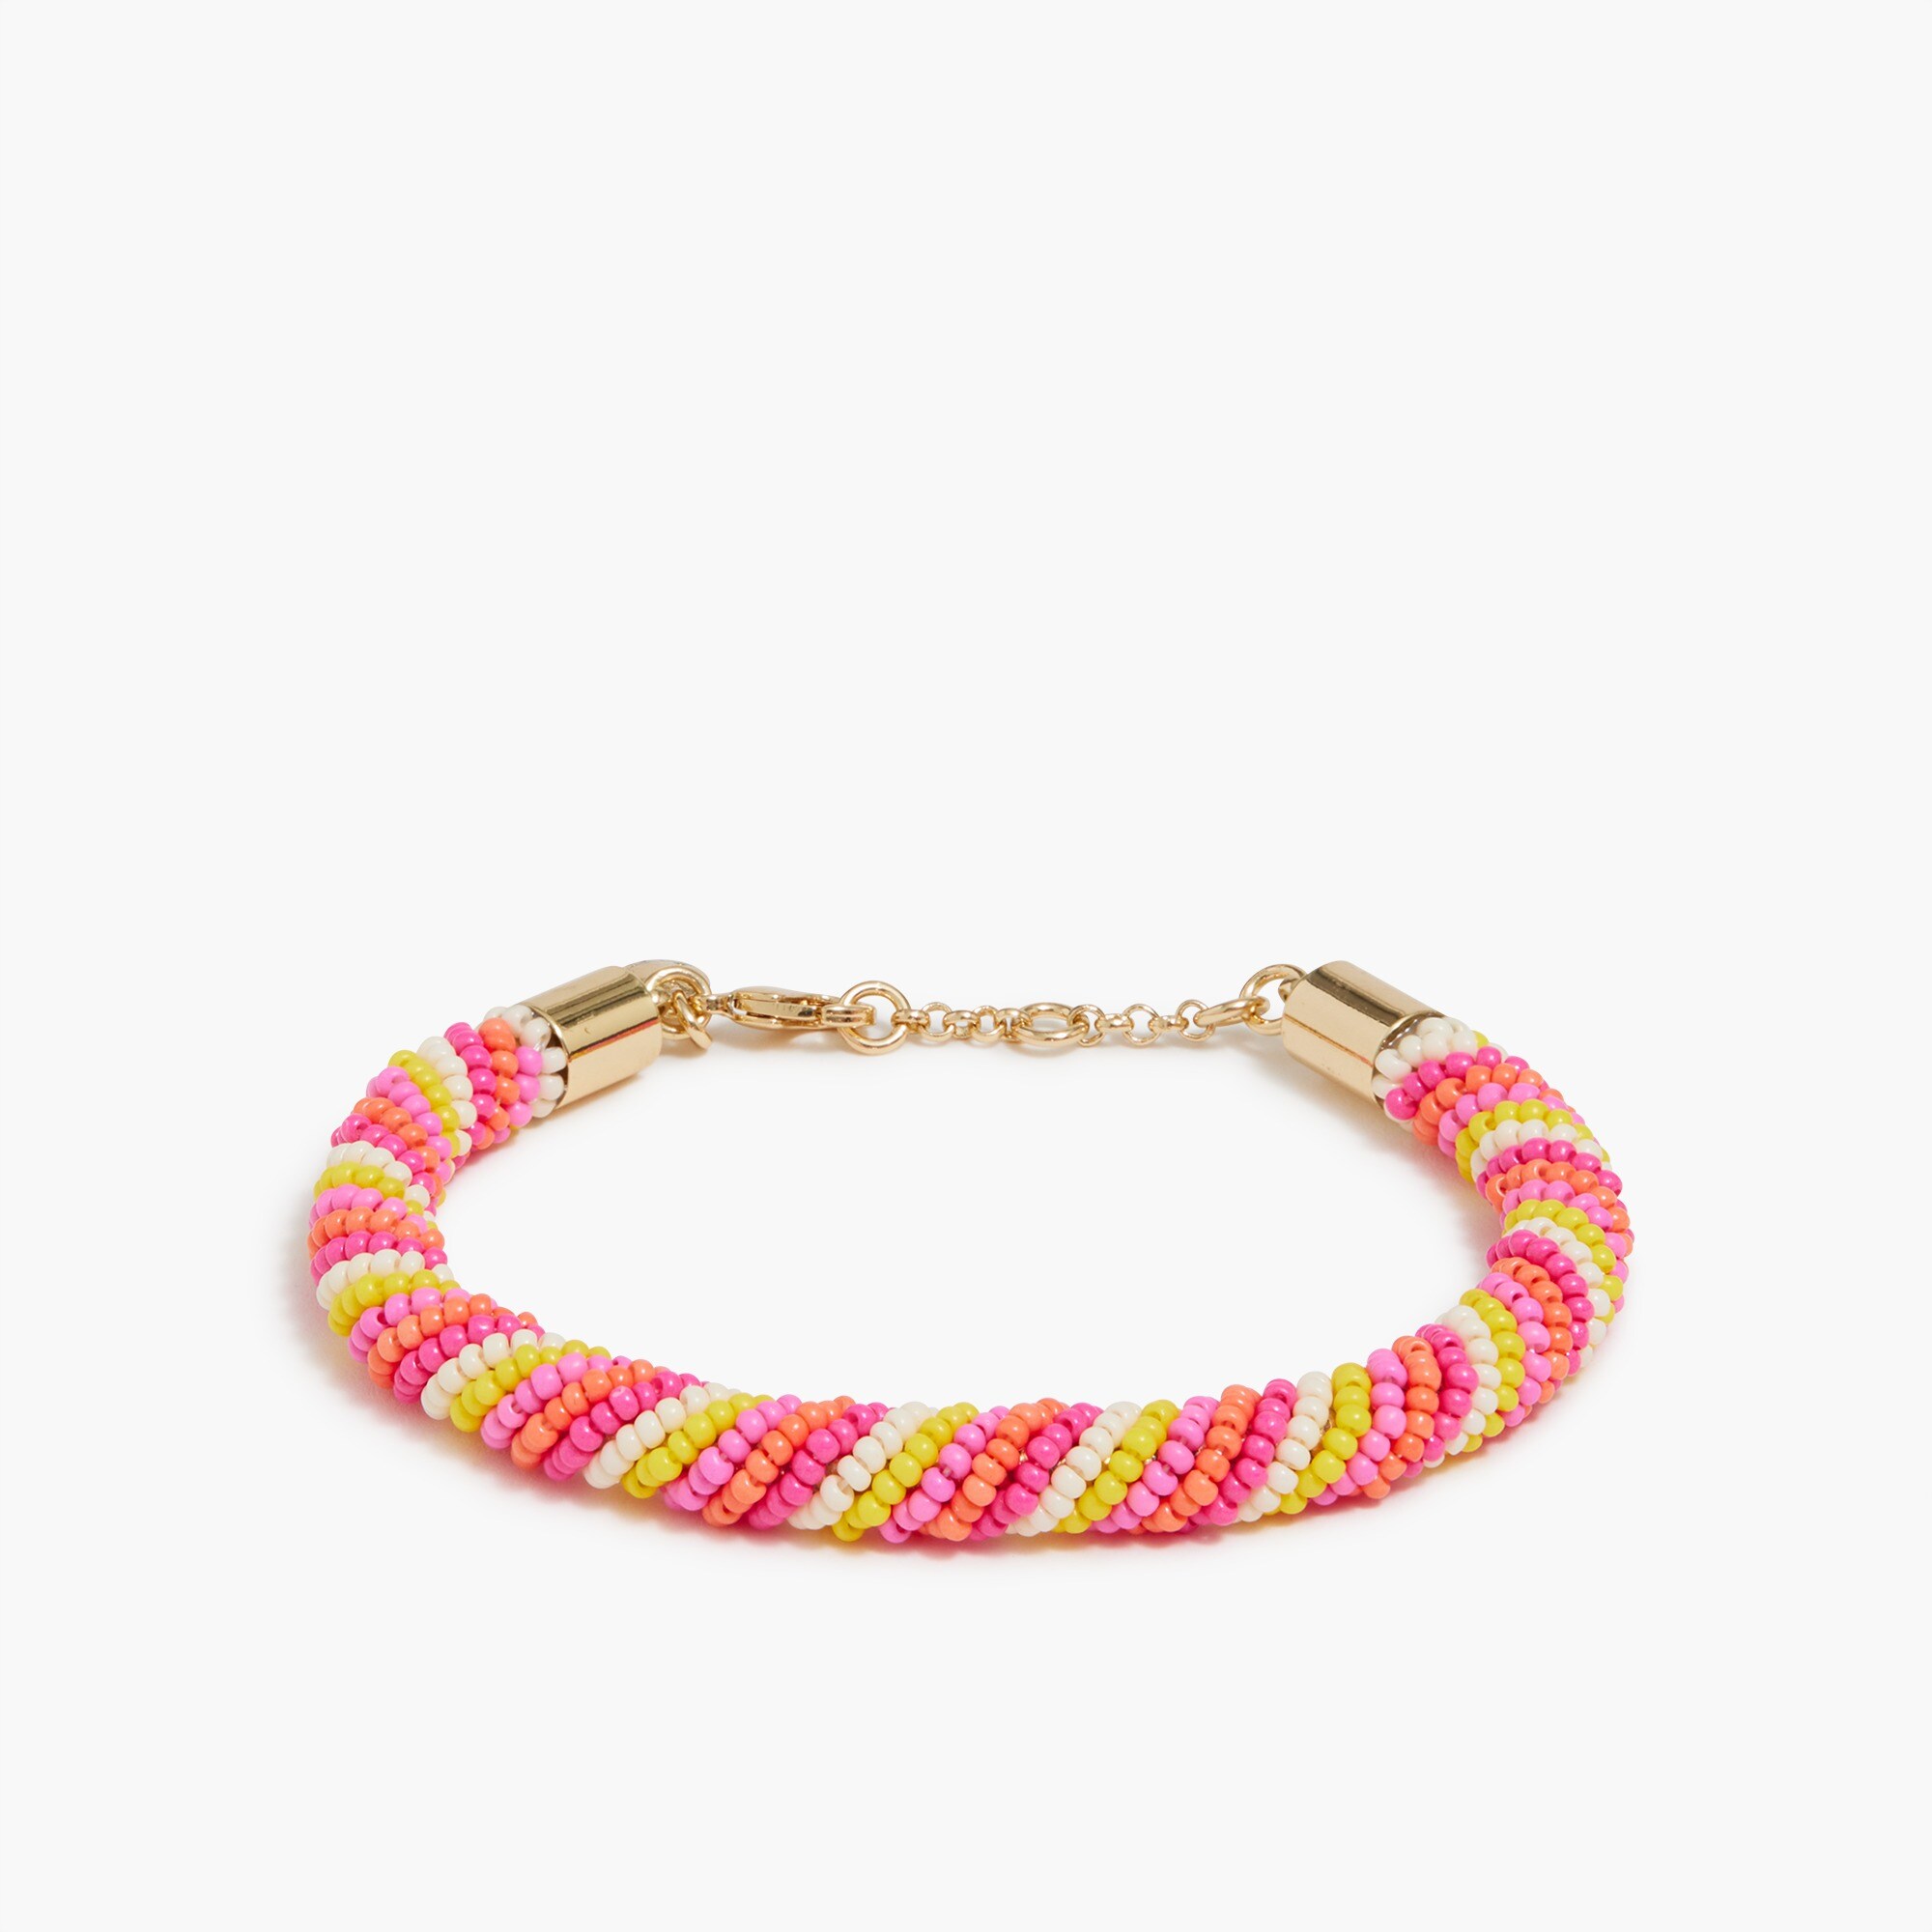  Wrapped bead bracelet